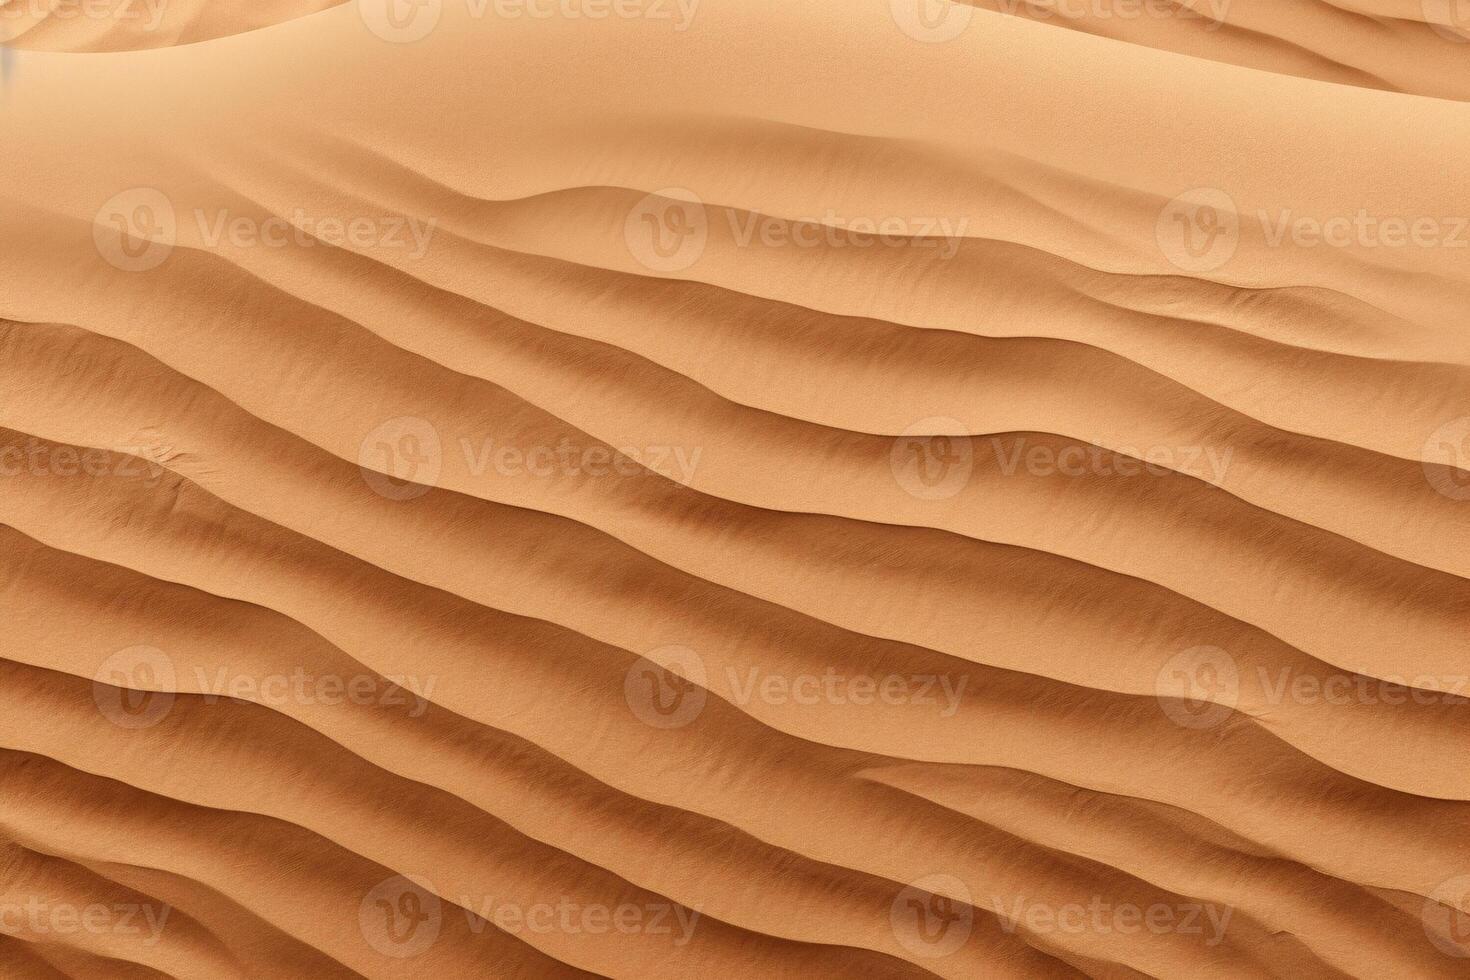 Sand Texture, Sand Texture Background, Sand Background, Sand Wave Texture, Brown Sand Texture, Desert sand Texture, sand waves in desert, photo